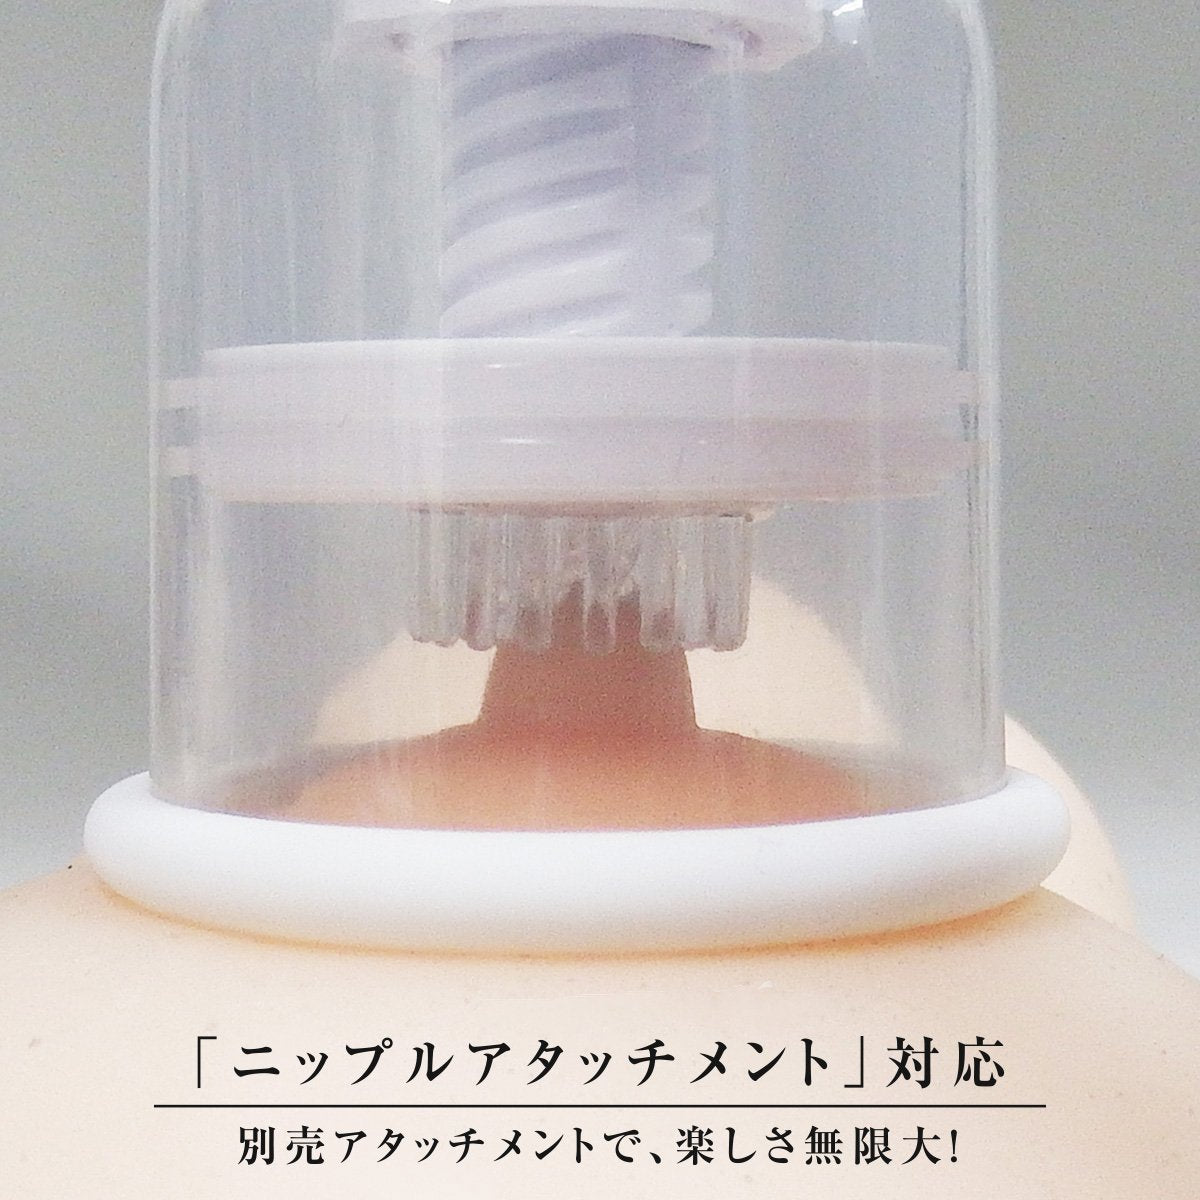 SSI JAPAN Nipple Dome R 哺乳款乳頭旋轉吸啜器 乳頭震動器 購買